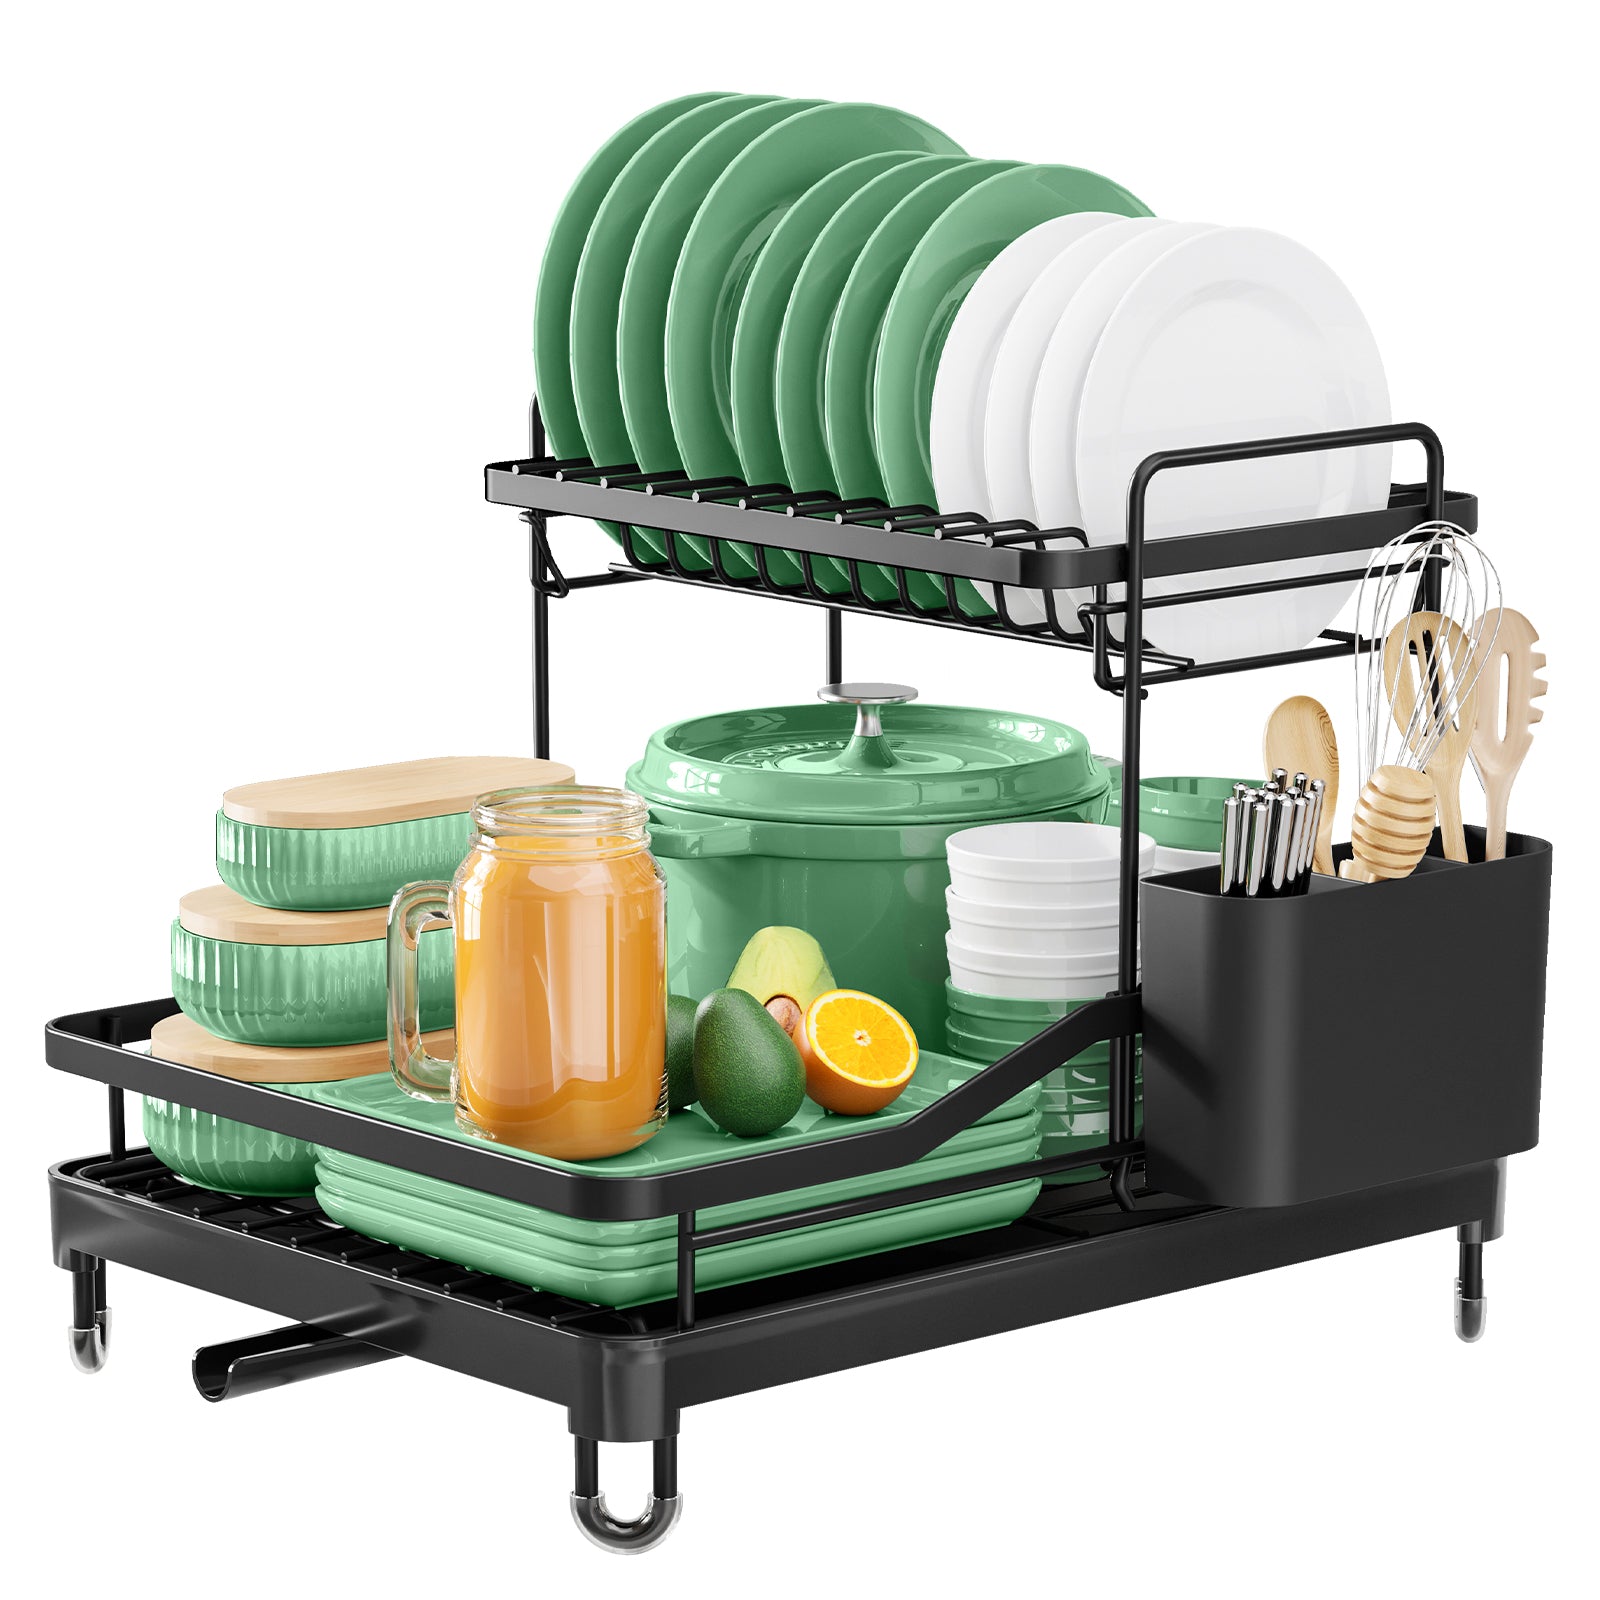 Kitsure Dish Drying Rack - Dish Racks for Kitchen Counter, 2-Tier Dish